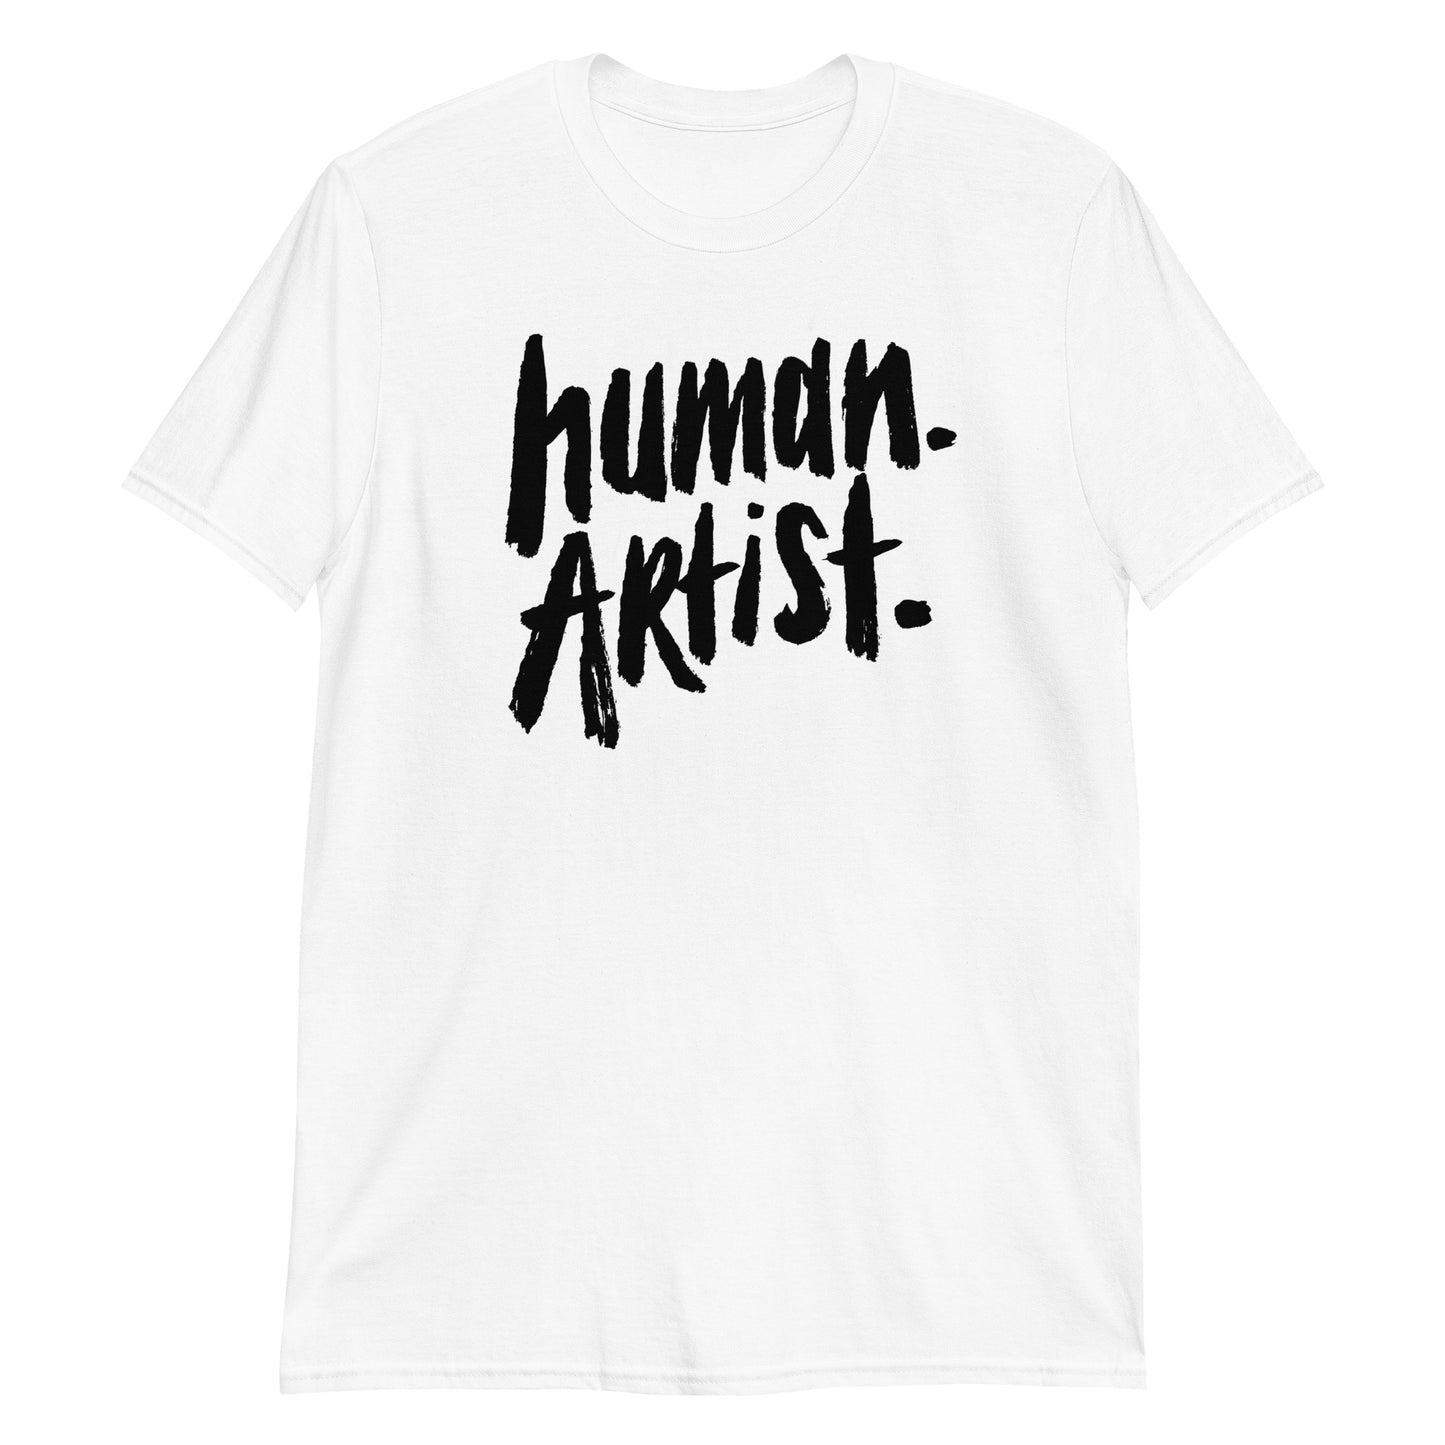 human. Artist. (on white or grey) T-Shirt